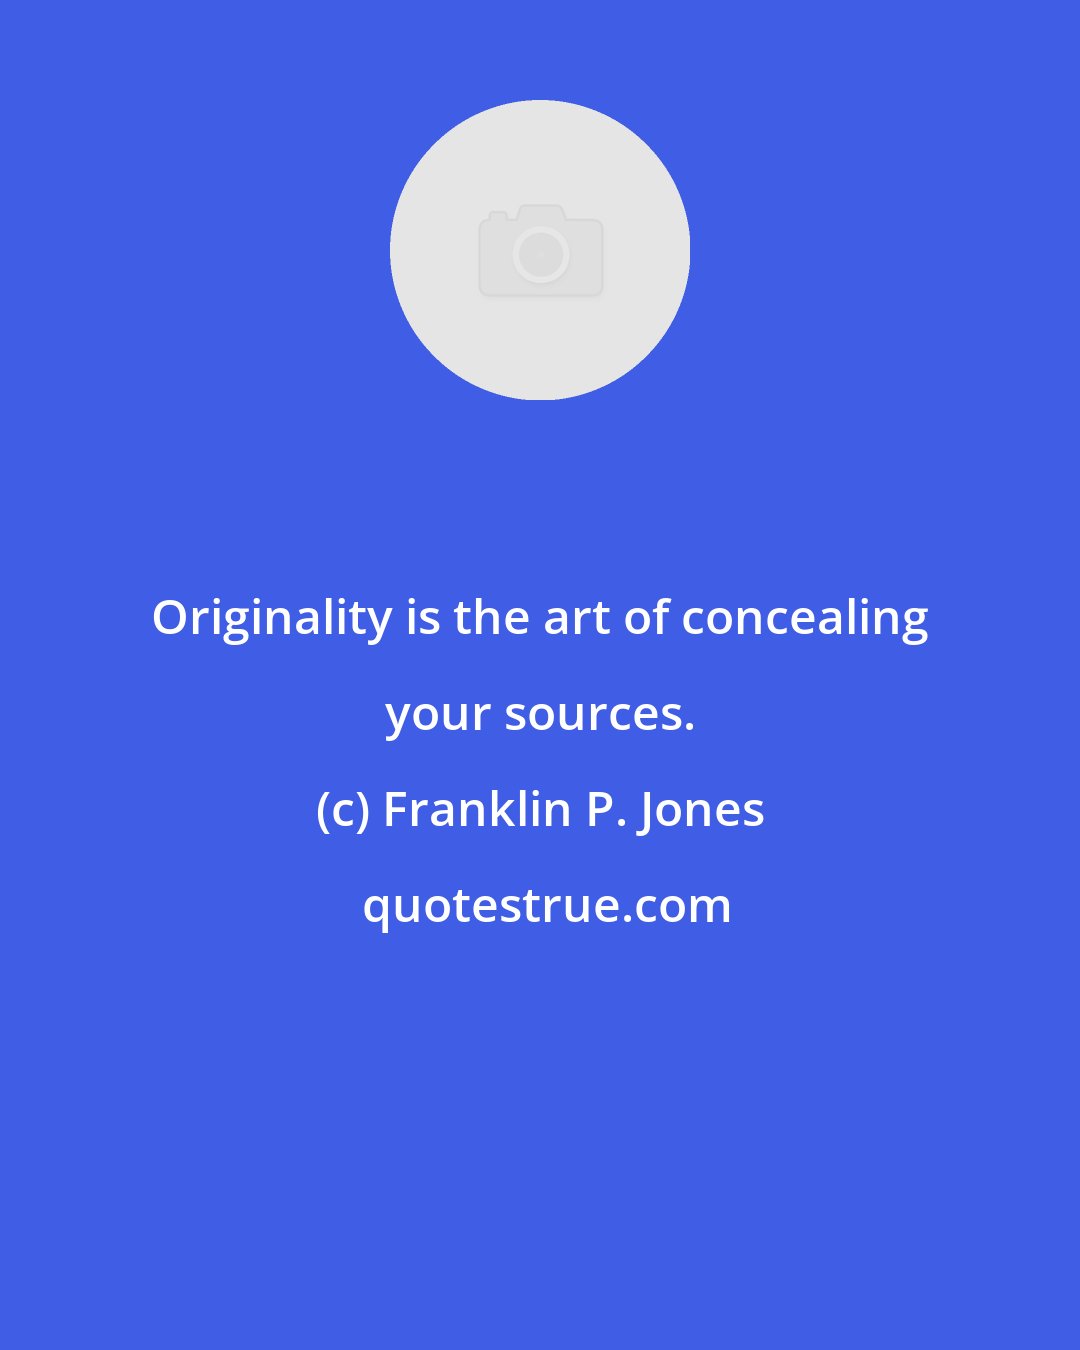 Franklin P. Jones: Originality is the art of concealing your sources.